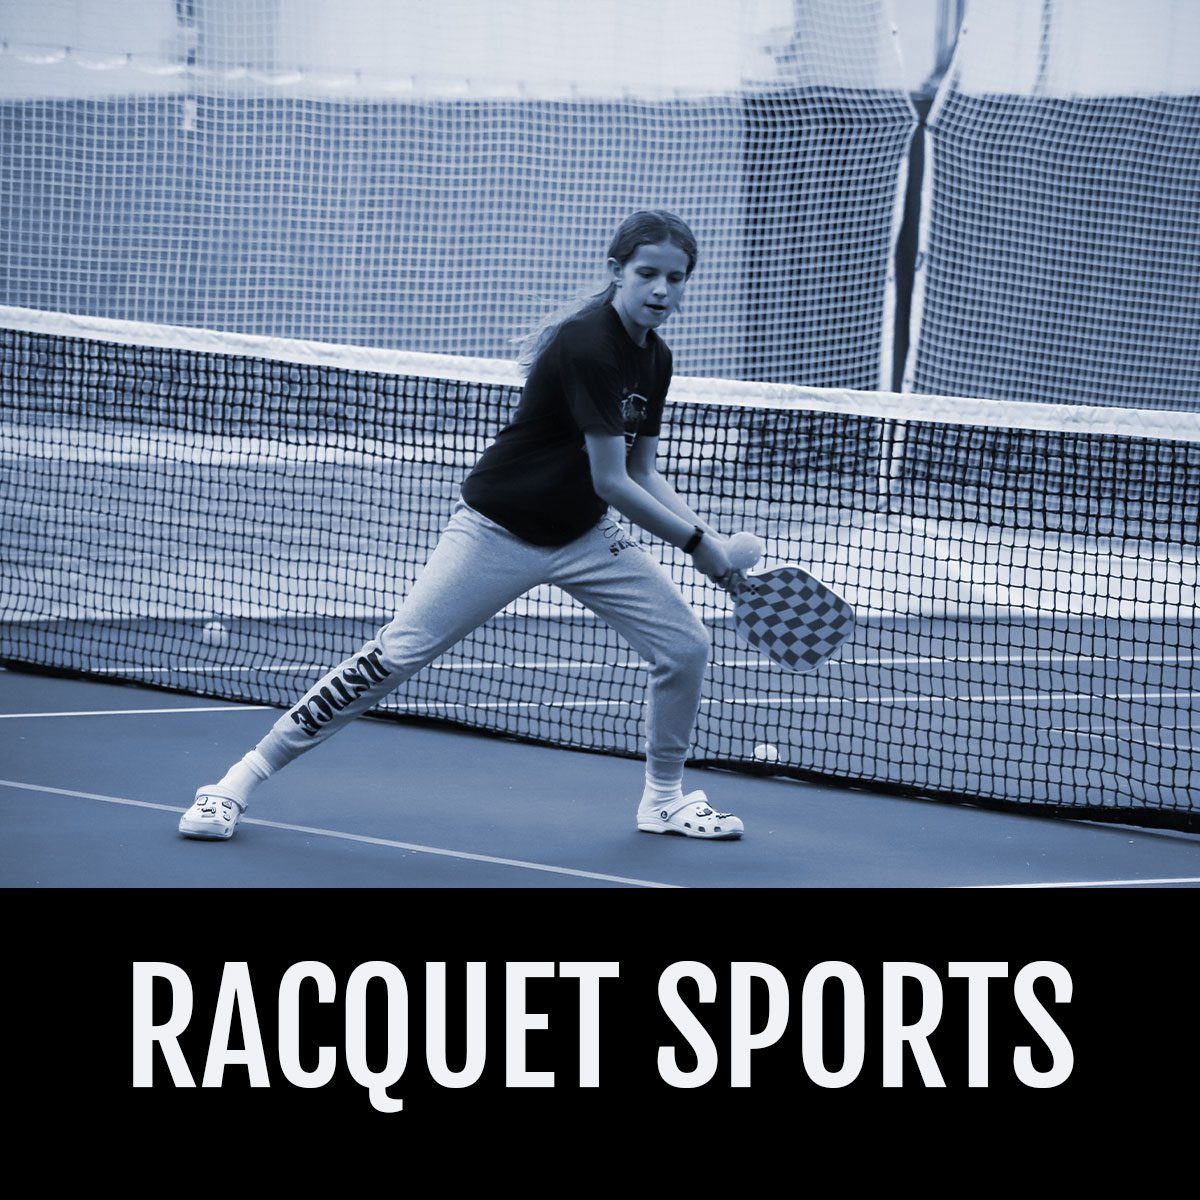 Racquet sports in Decatur